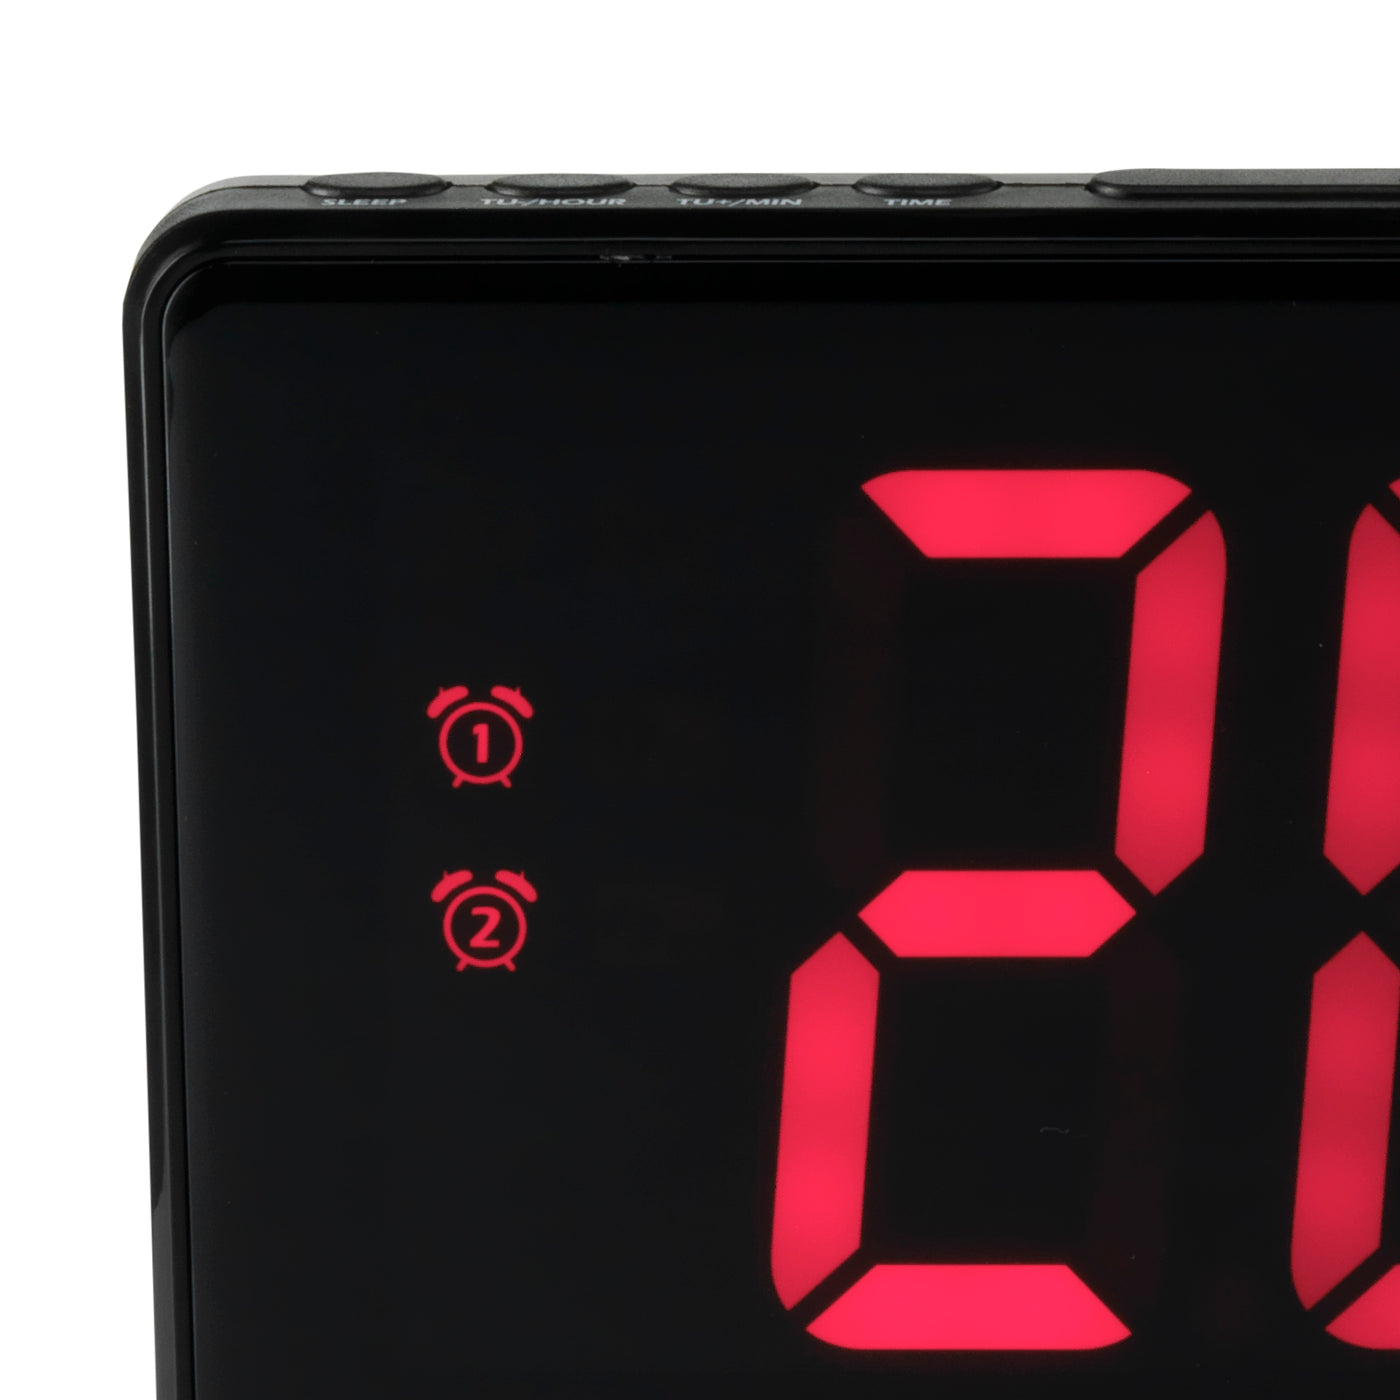 Fysic FK470 - FM alarmklok met XXL display